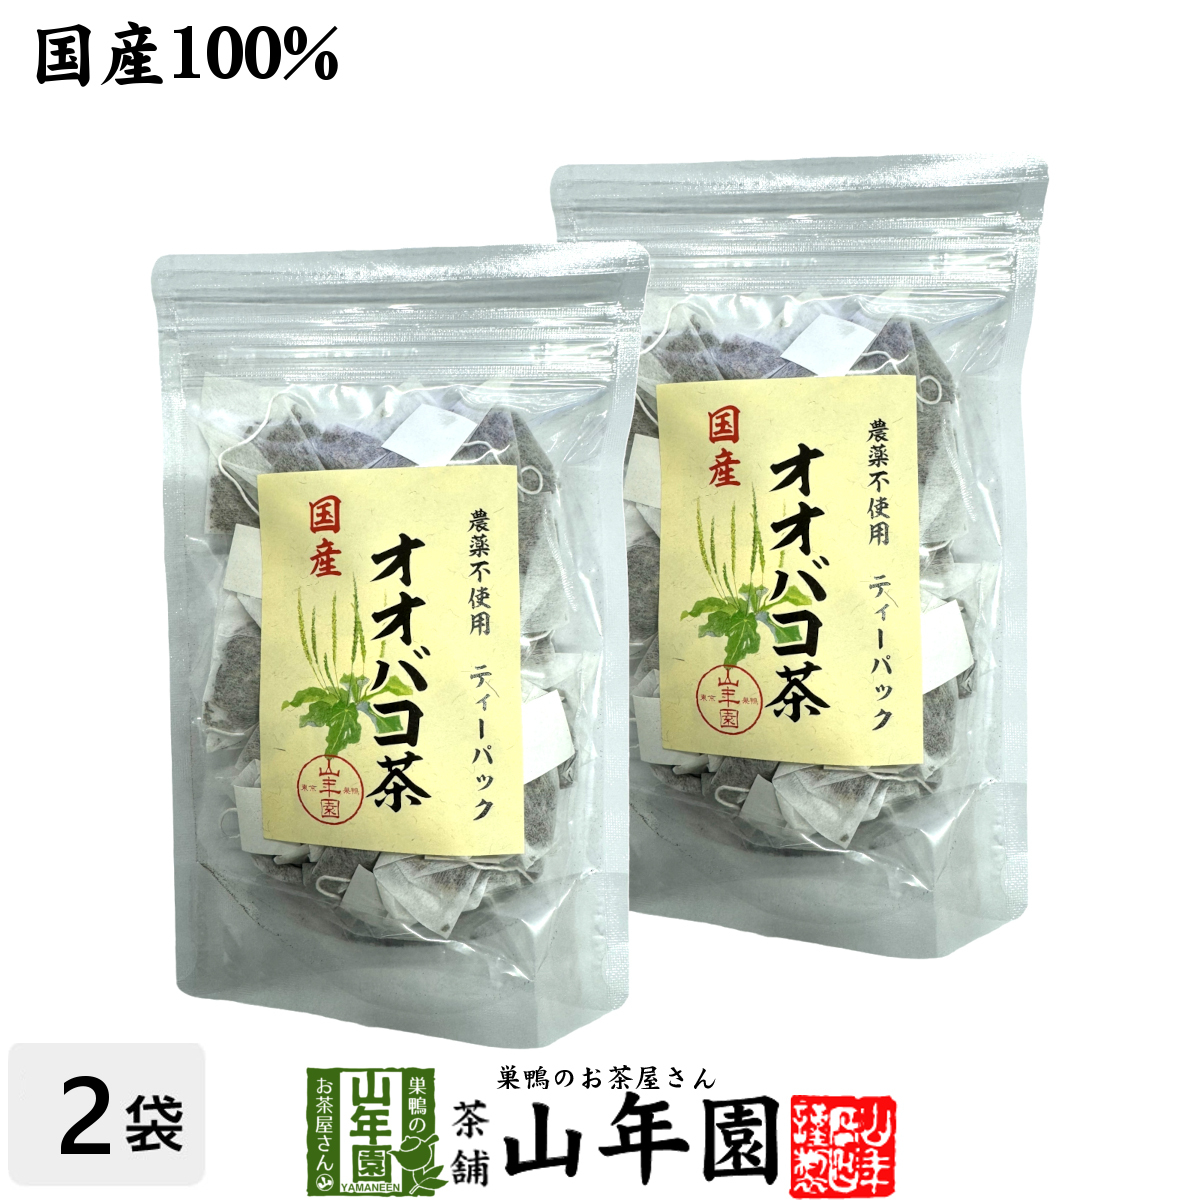  tea health tea domestic production 100% oo bako tea tea pack 1.5g×20p×2 sack set less pesticide non Cafe in Miyazaki prefecture production 